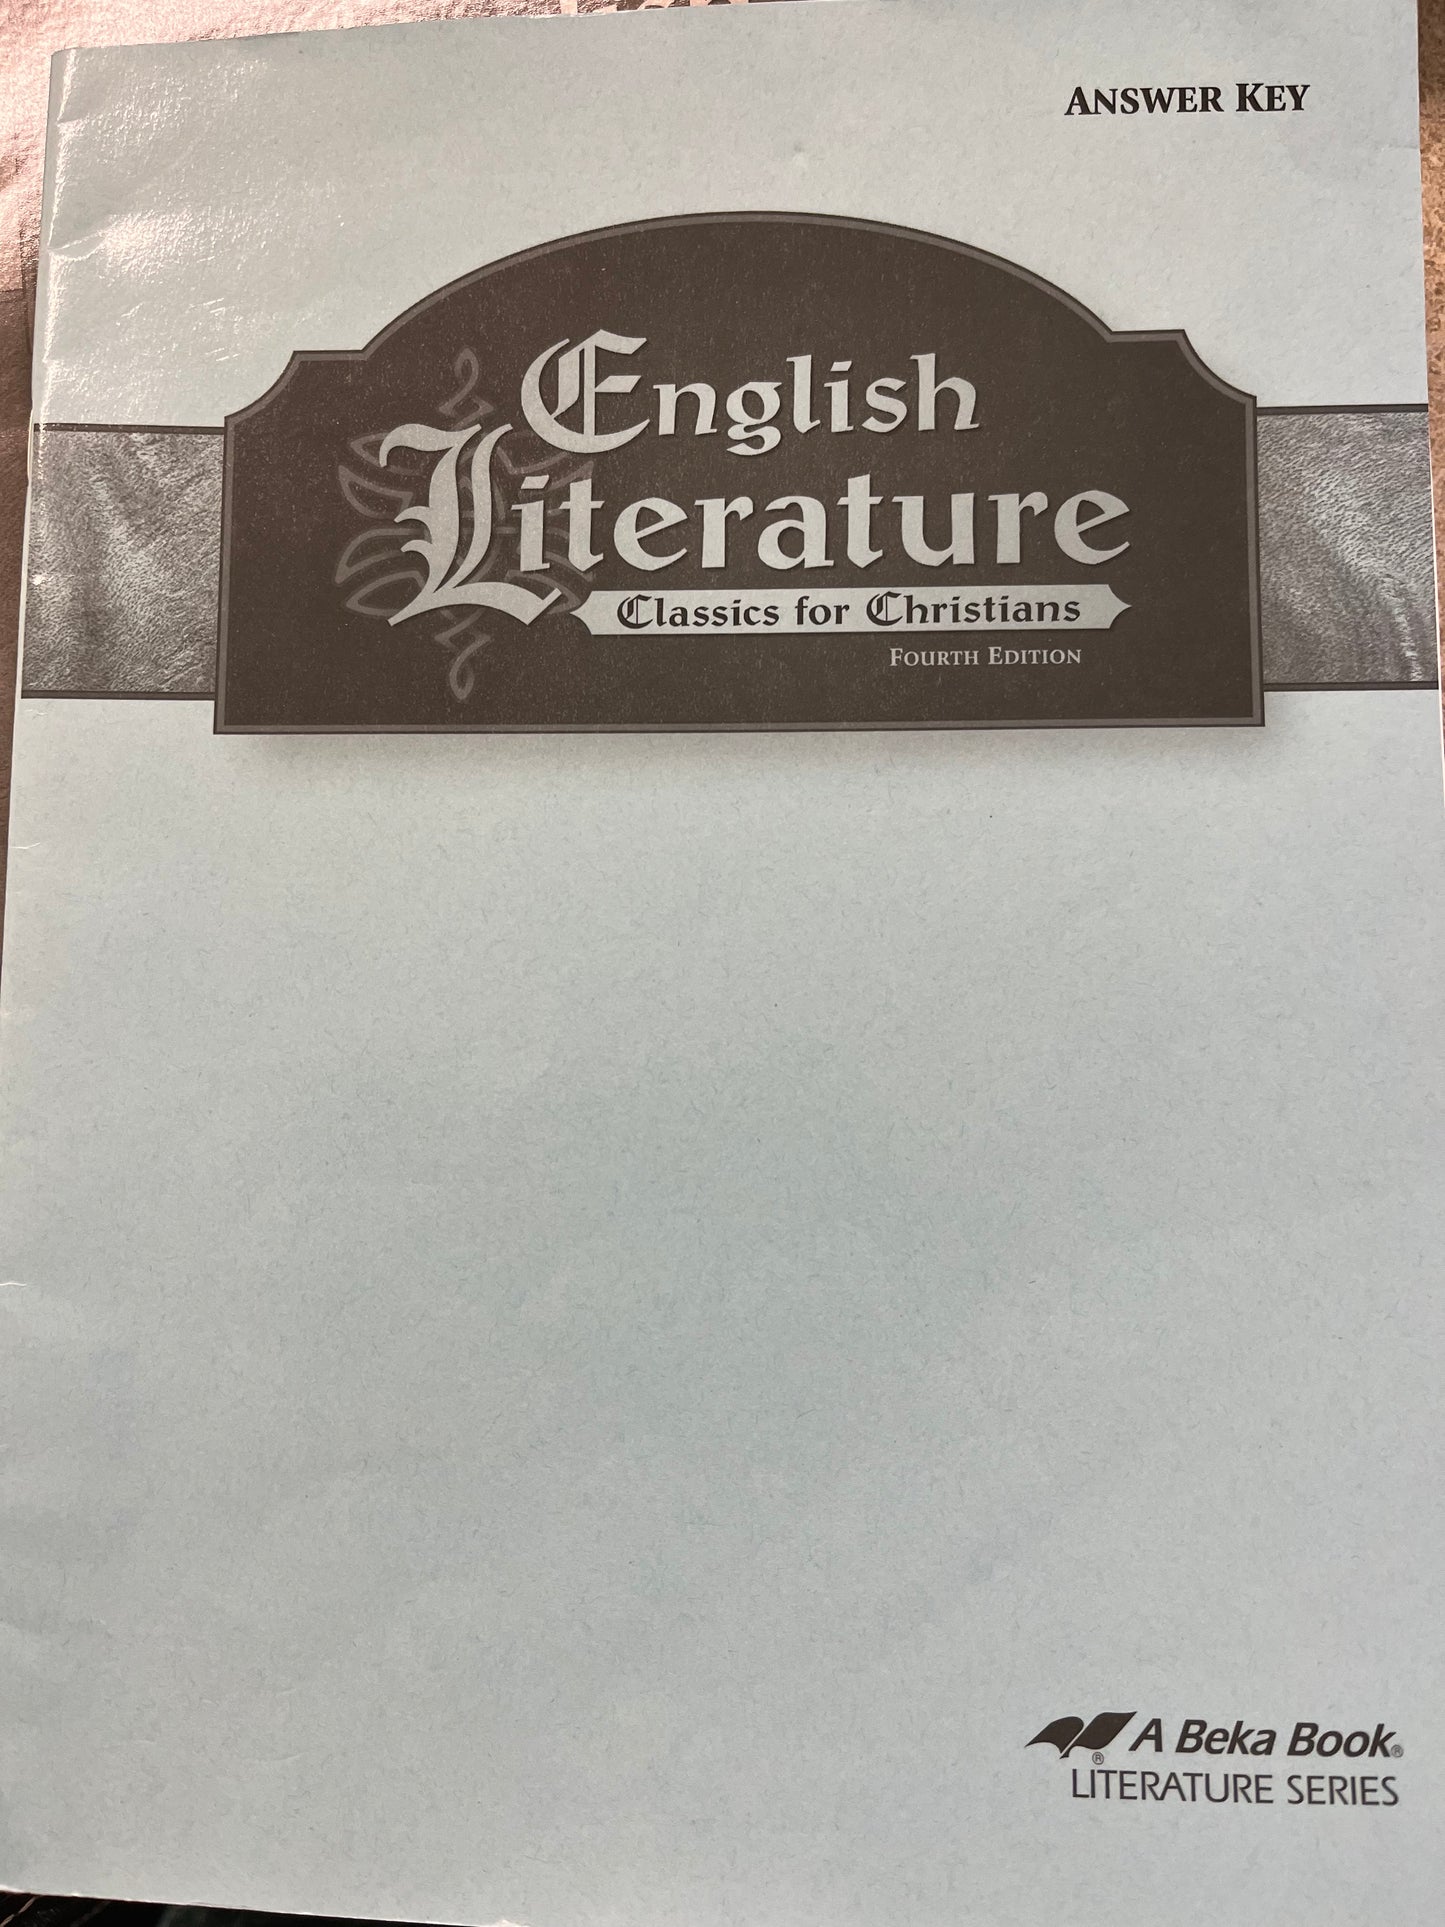 English Literature 4th Ed.  - Test Key